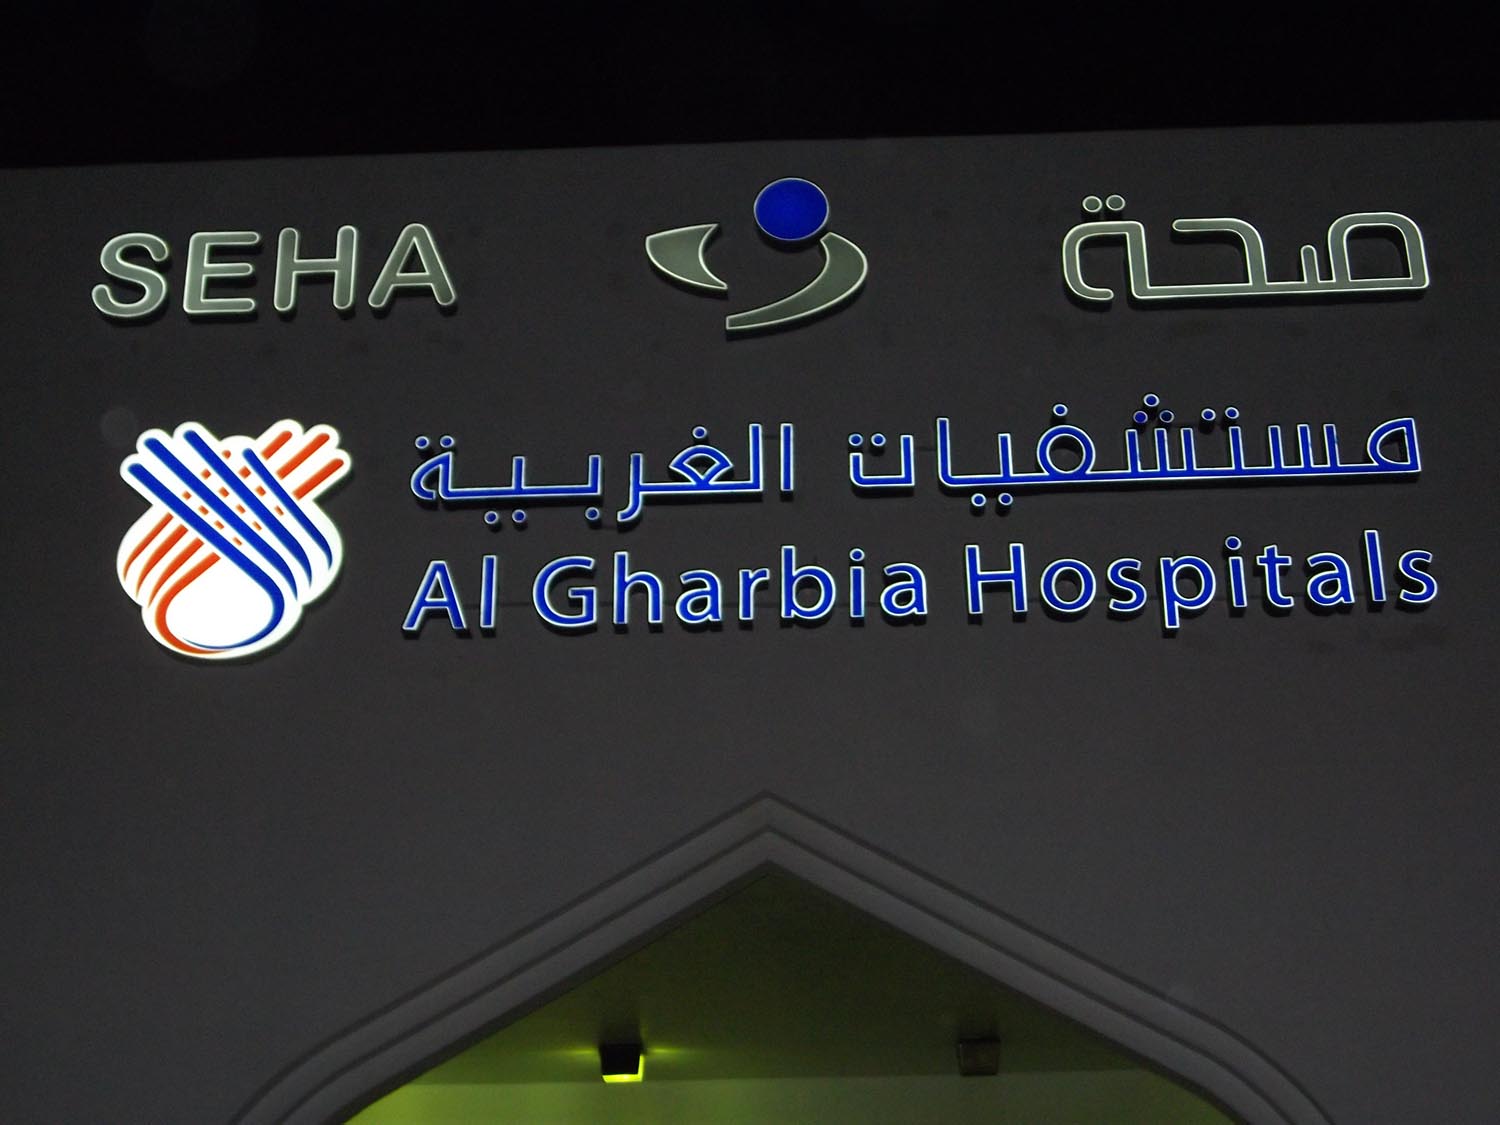 <h2>Al Gharbia - External Sign</h2><br/>